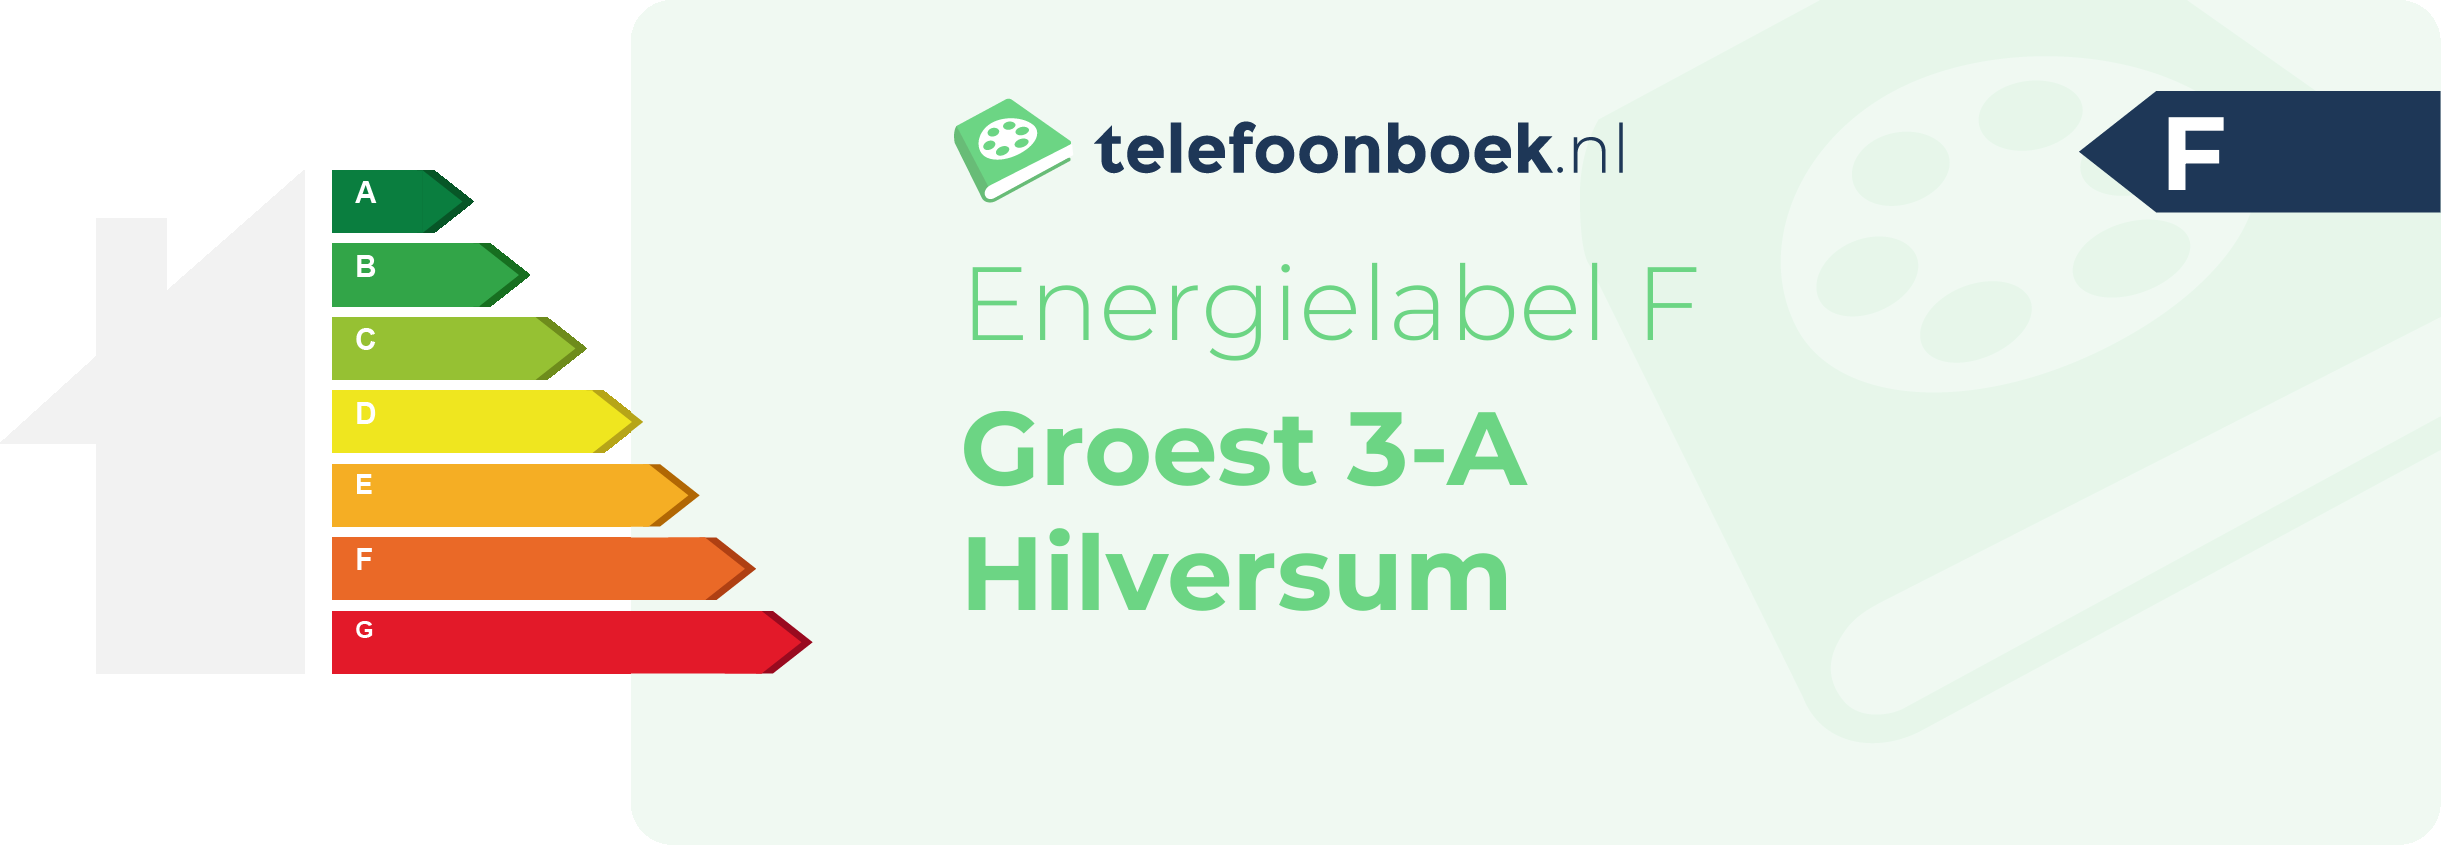 Energielabel Groest 3-A Hilversum